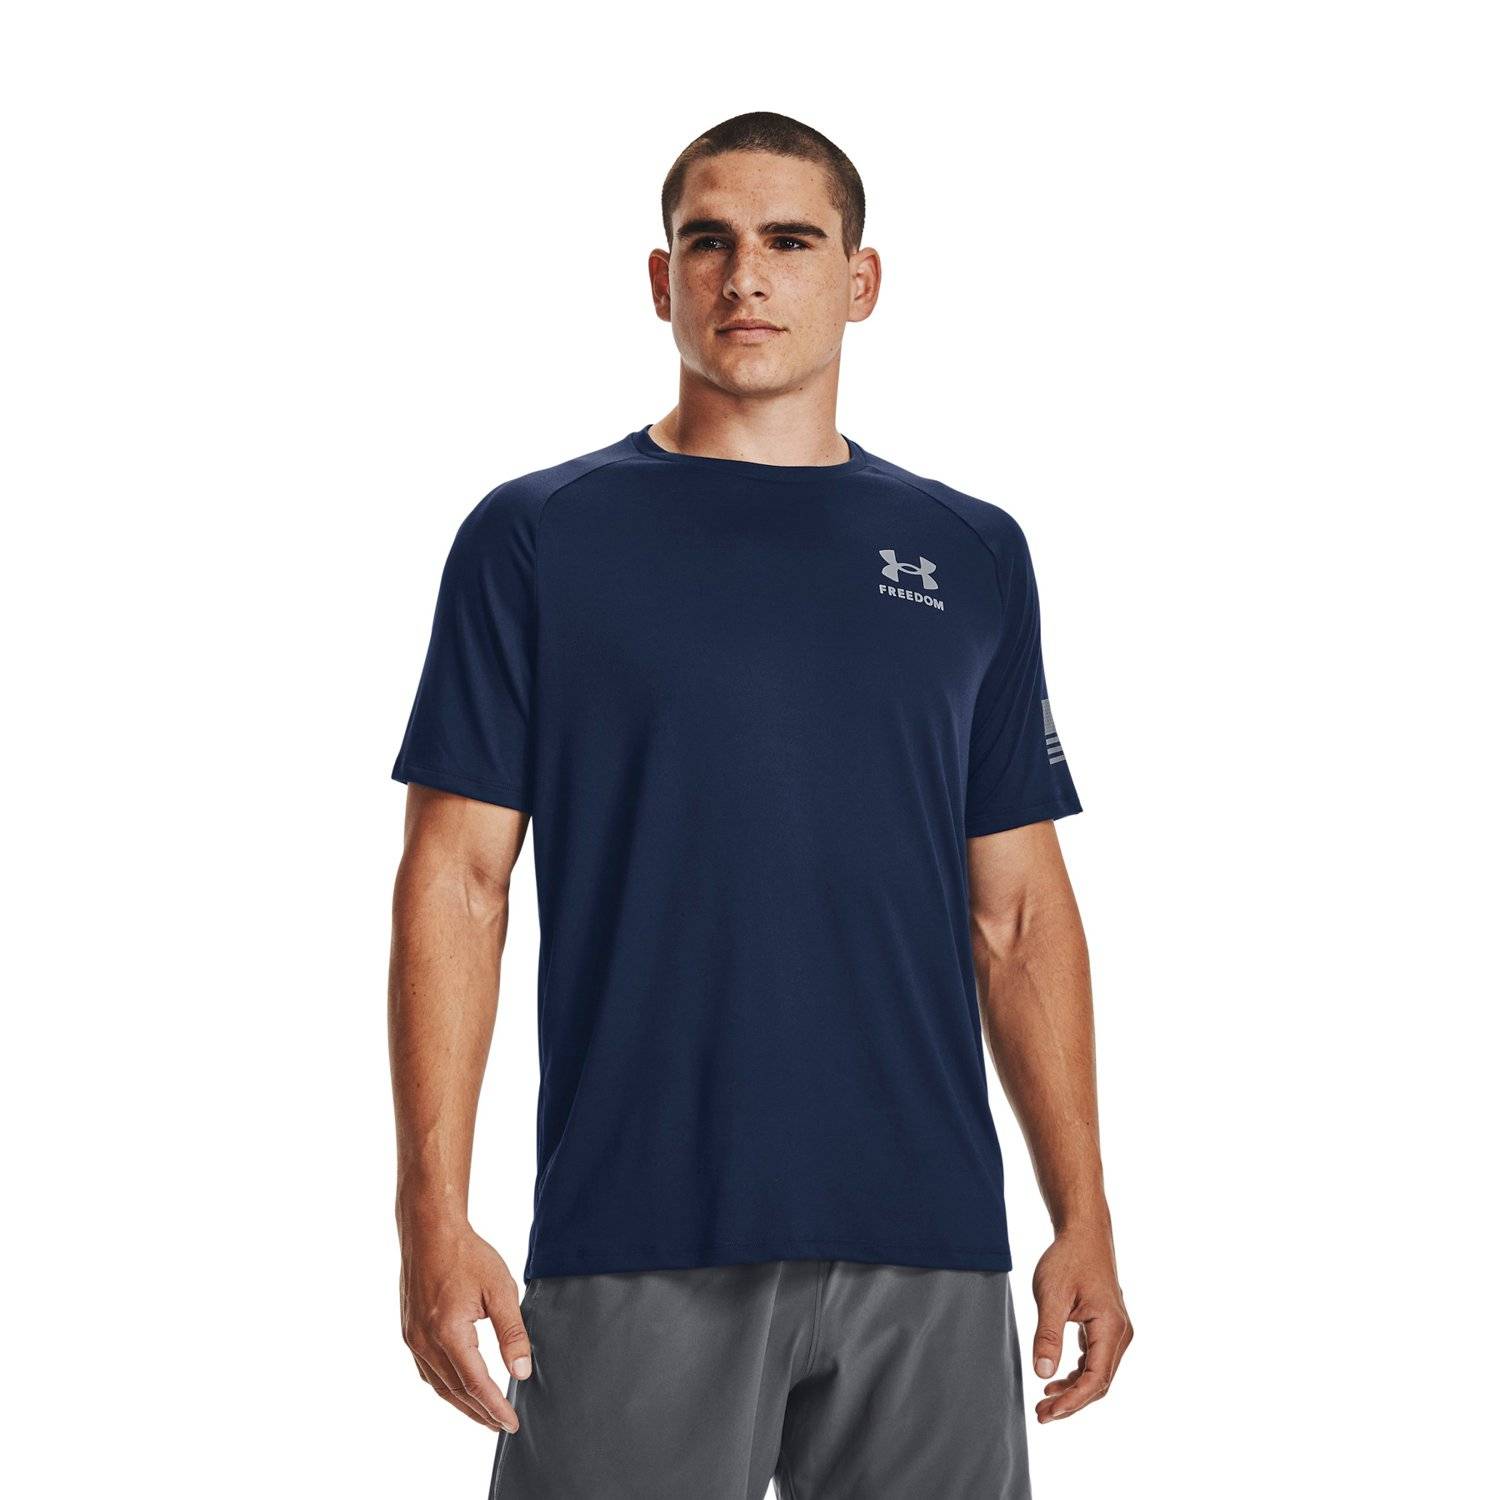 Under Armour Men's UA HeatGear Compression Shirt, Sleeveless